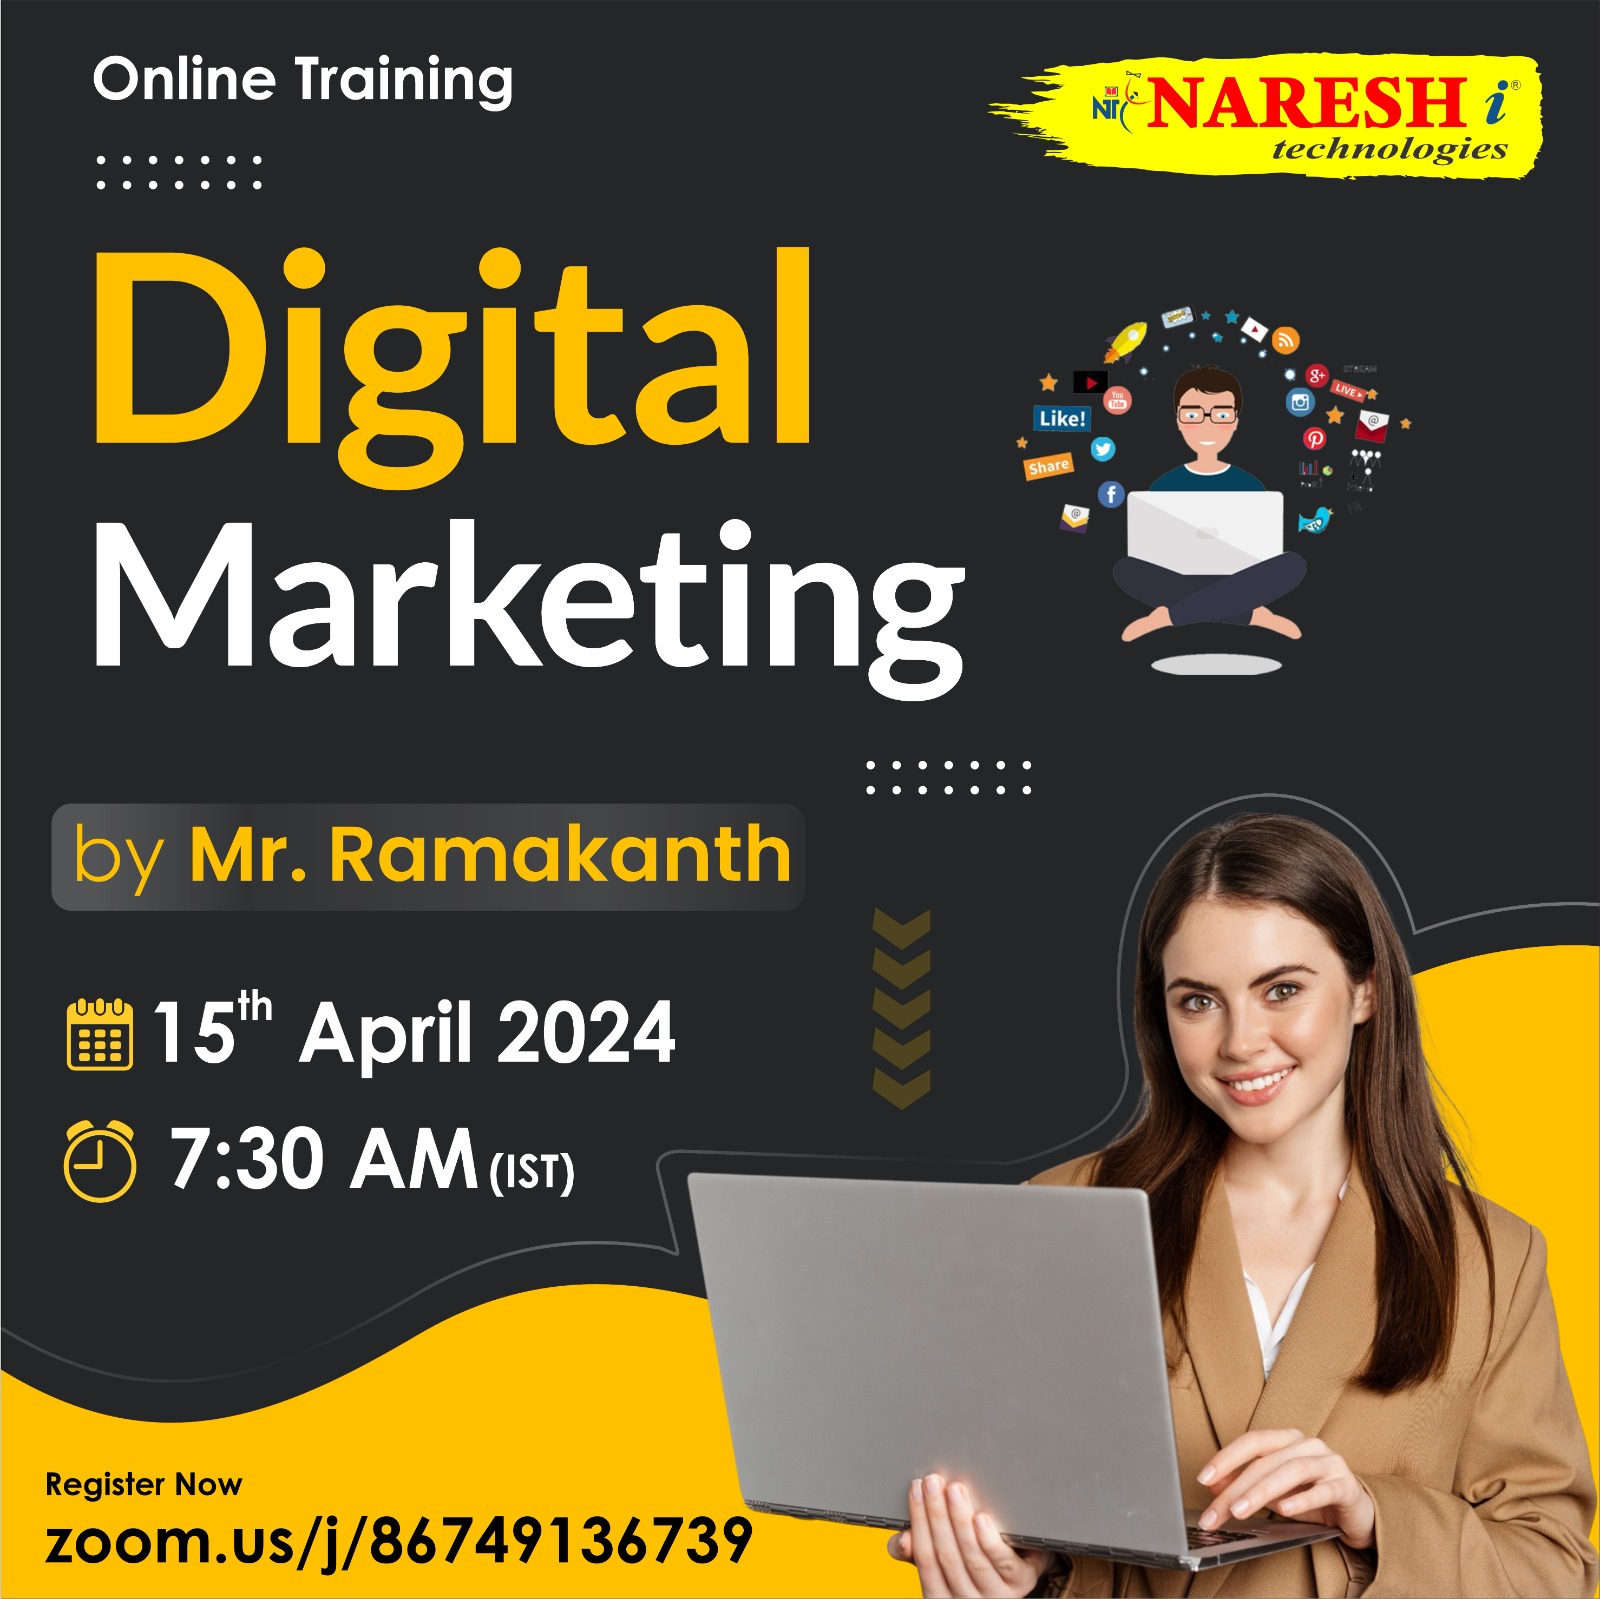 Top Digital Marketing Courses in Ameerpet, Hyderabad - NareshiT, Hyderabad, Telangana, India